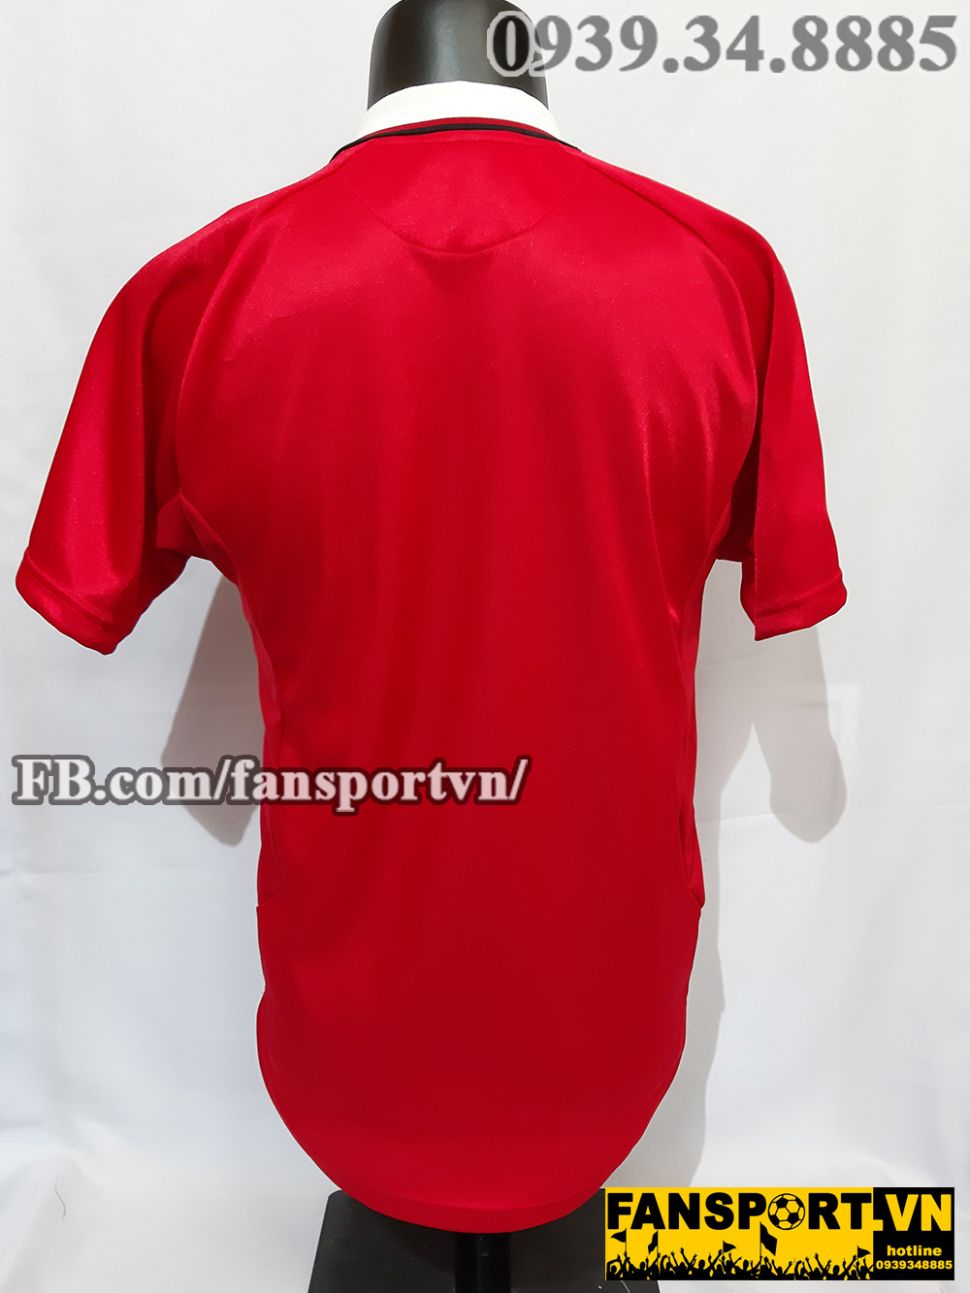 Áo đấu Manchester United UEFA Super Cup 1999 home shirt jersey red